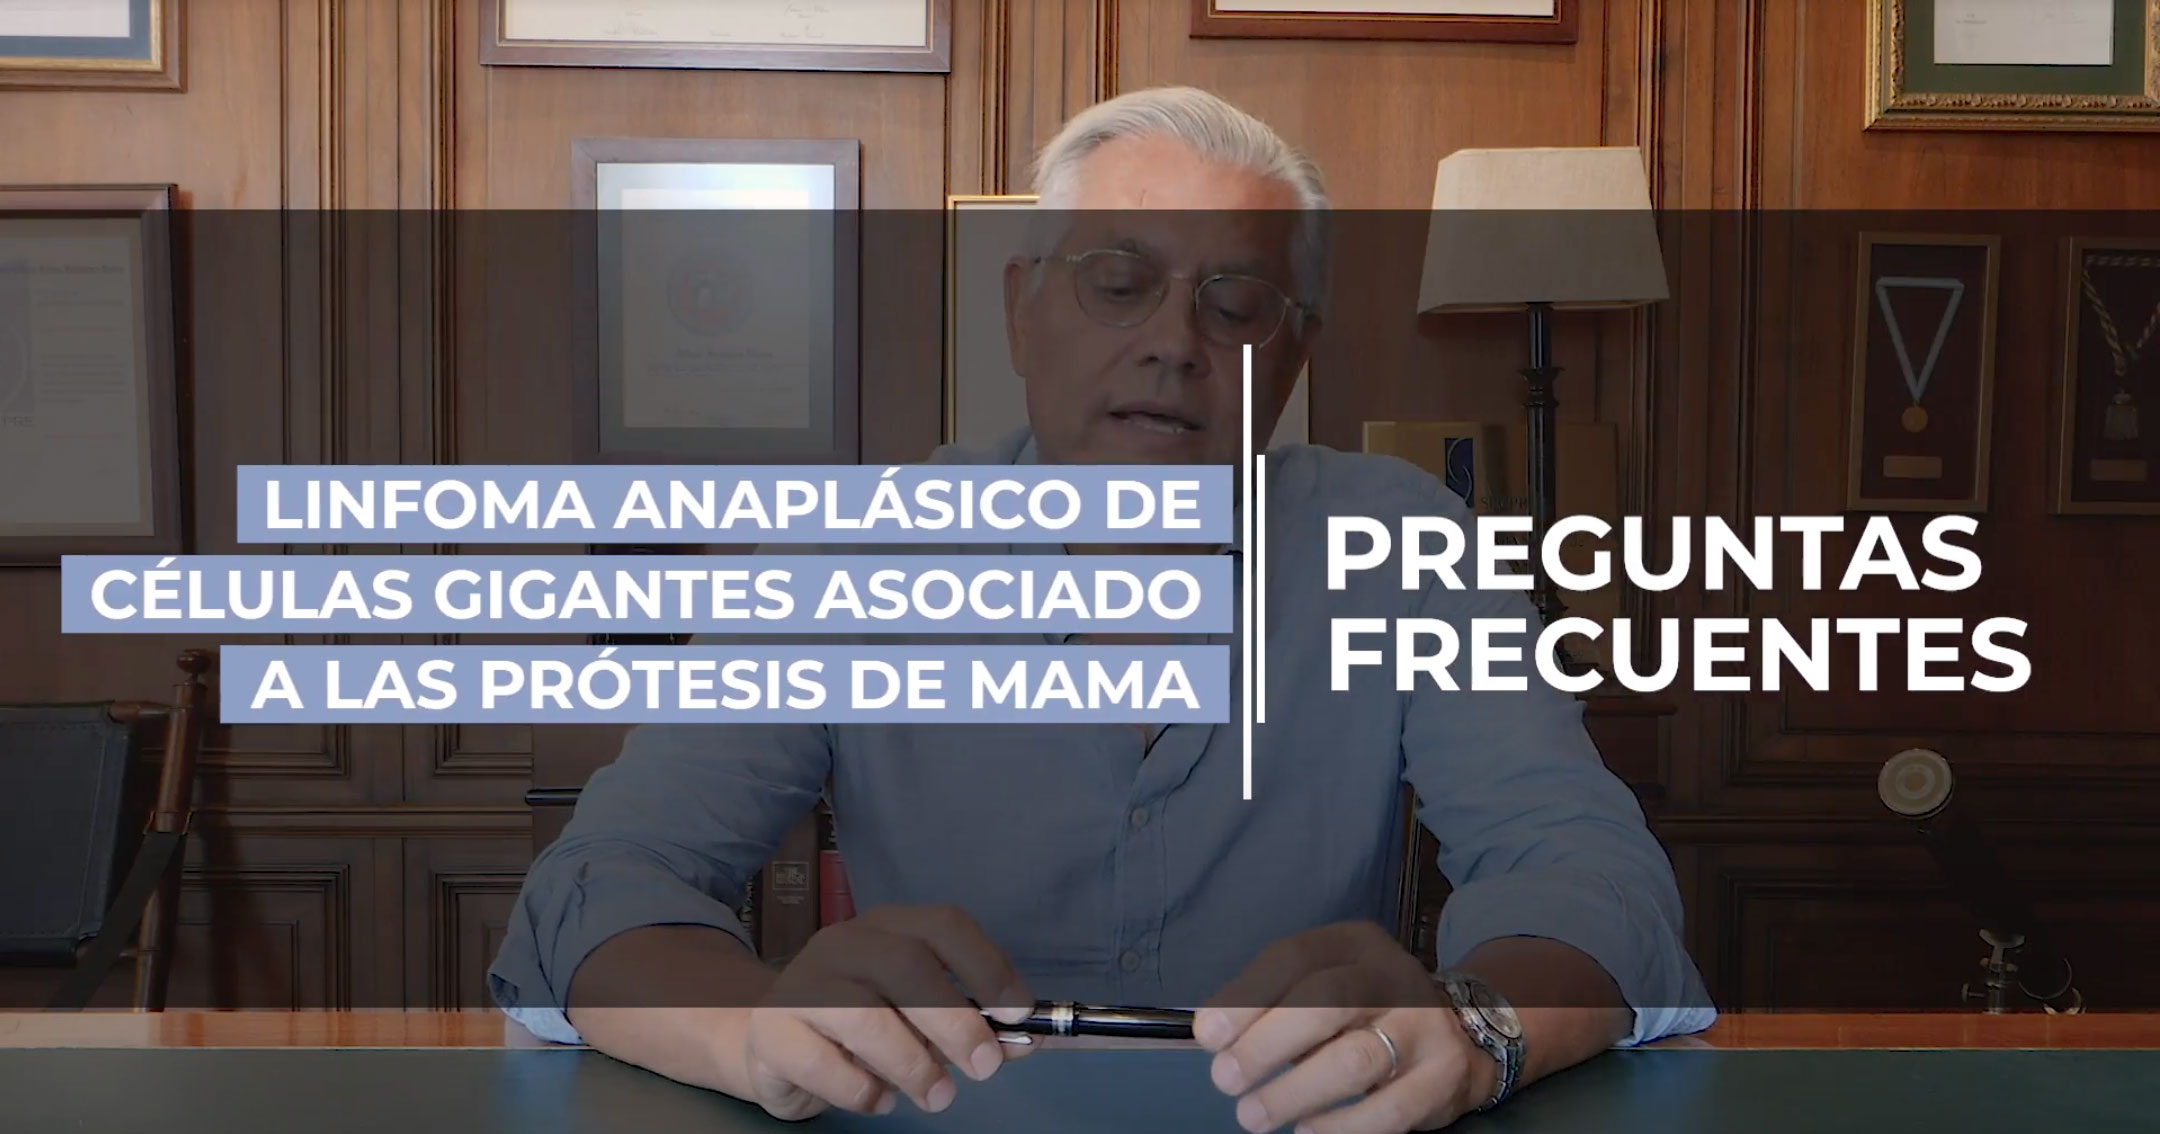 Videoblog del Dr. Fernández Blanco acerca del linfoma anaplásico de células gigantes asociado a las prótesis de mama